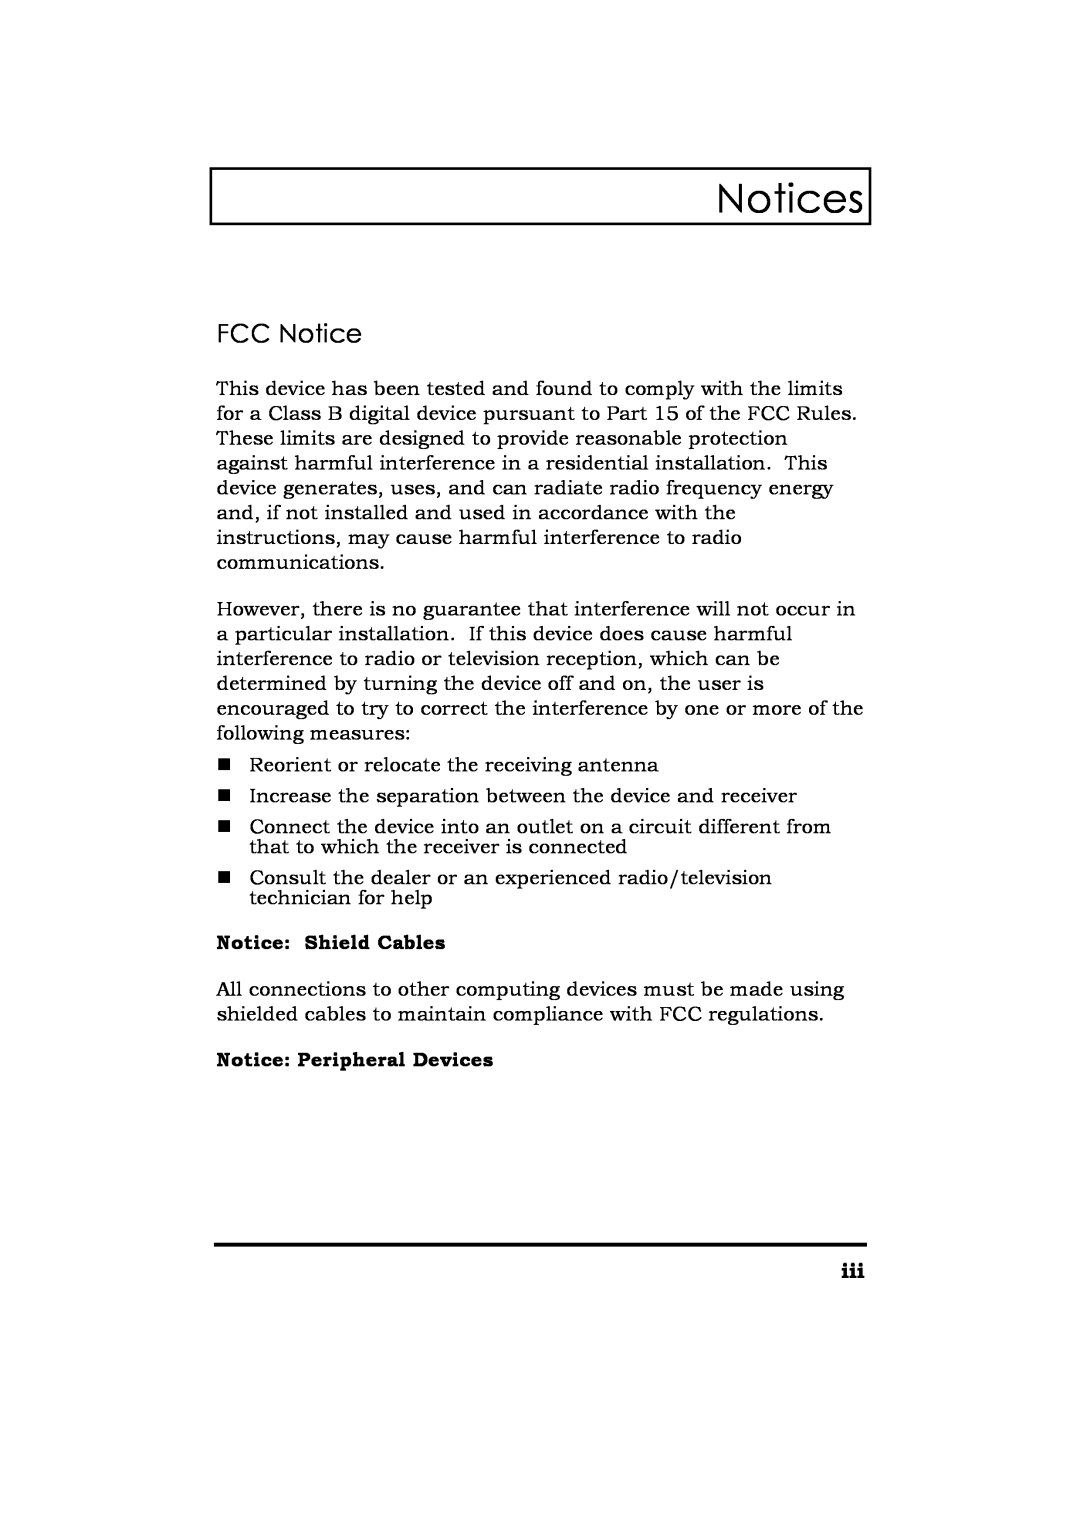 Acer Extensa 365 manual Notices, FCC Notice, Notice Shield Cables, Notice Peripheral Devices 